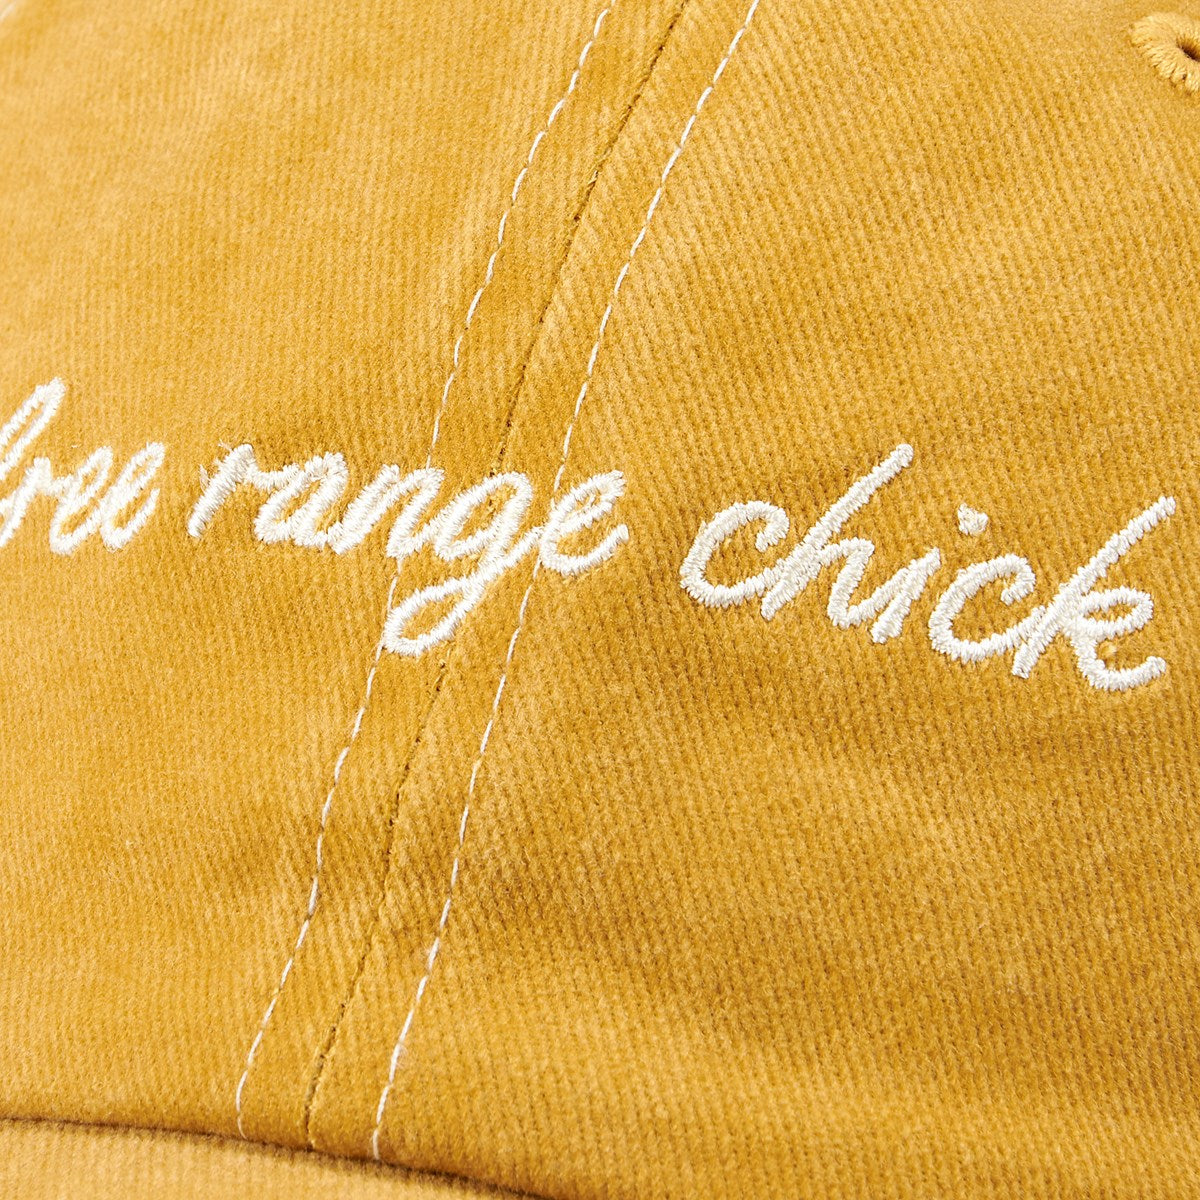 💙 Free Range Chick Baseball Cap